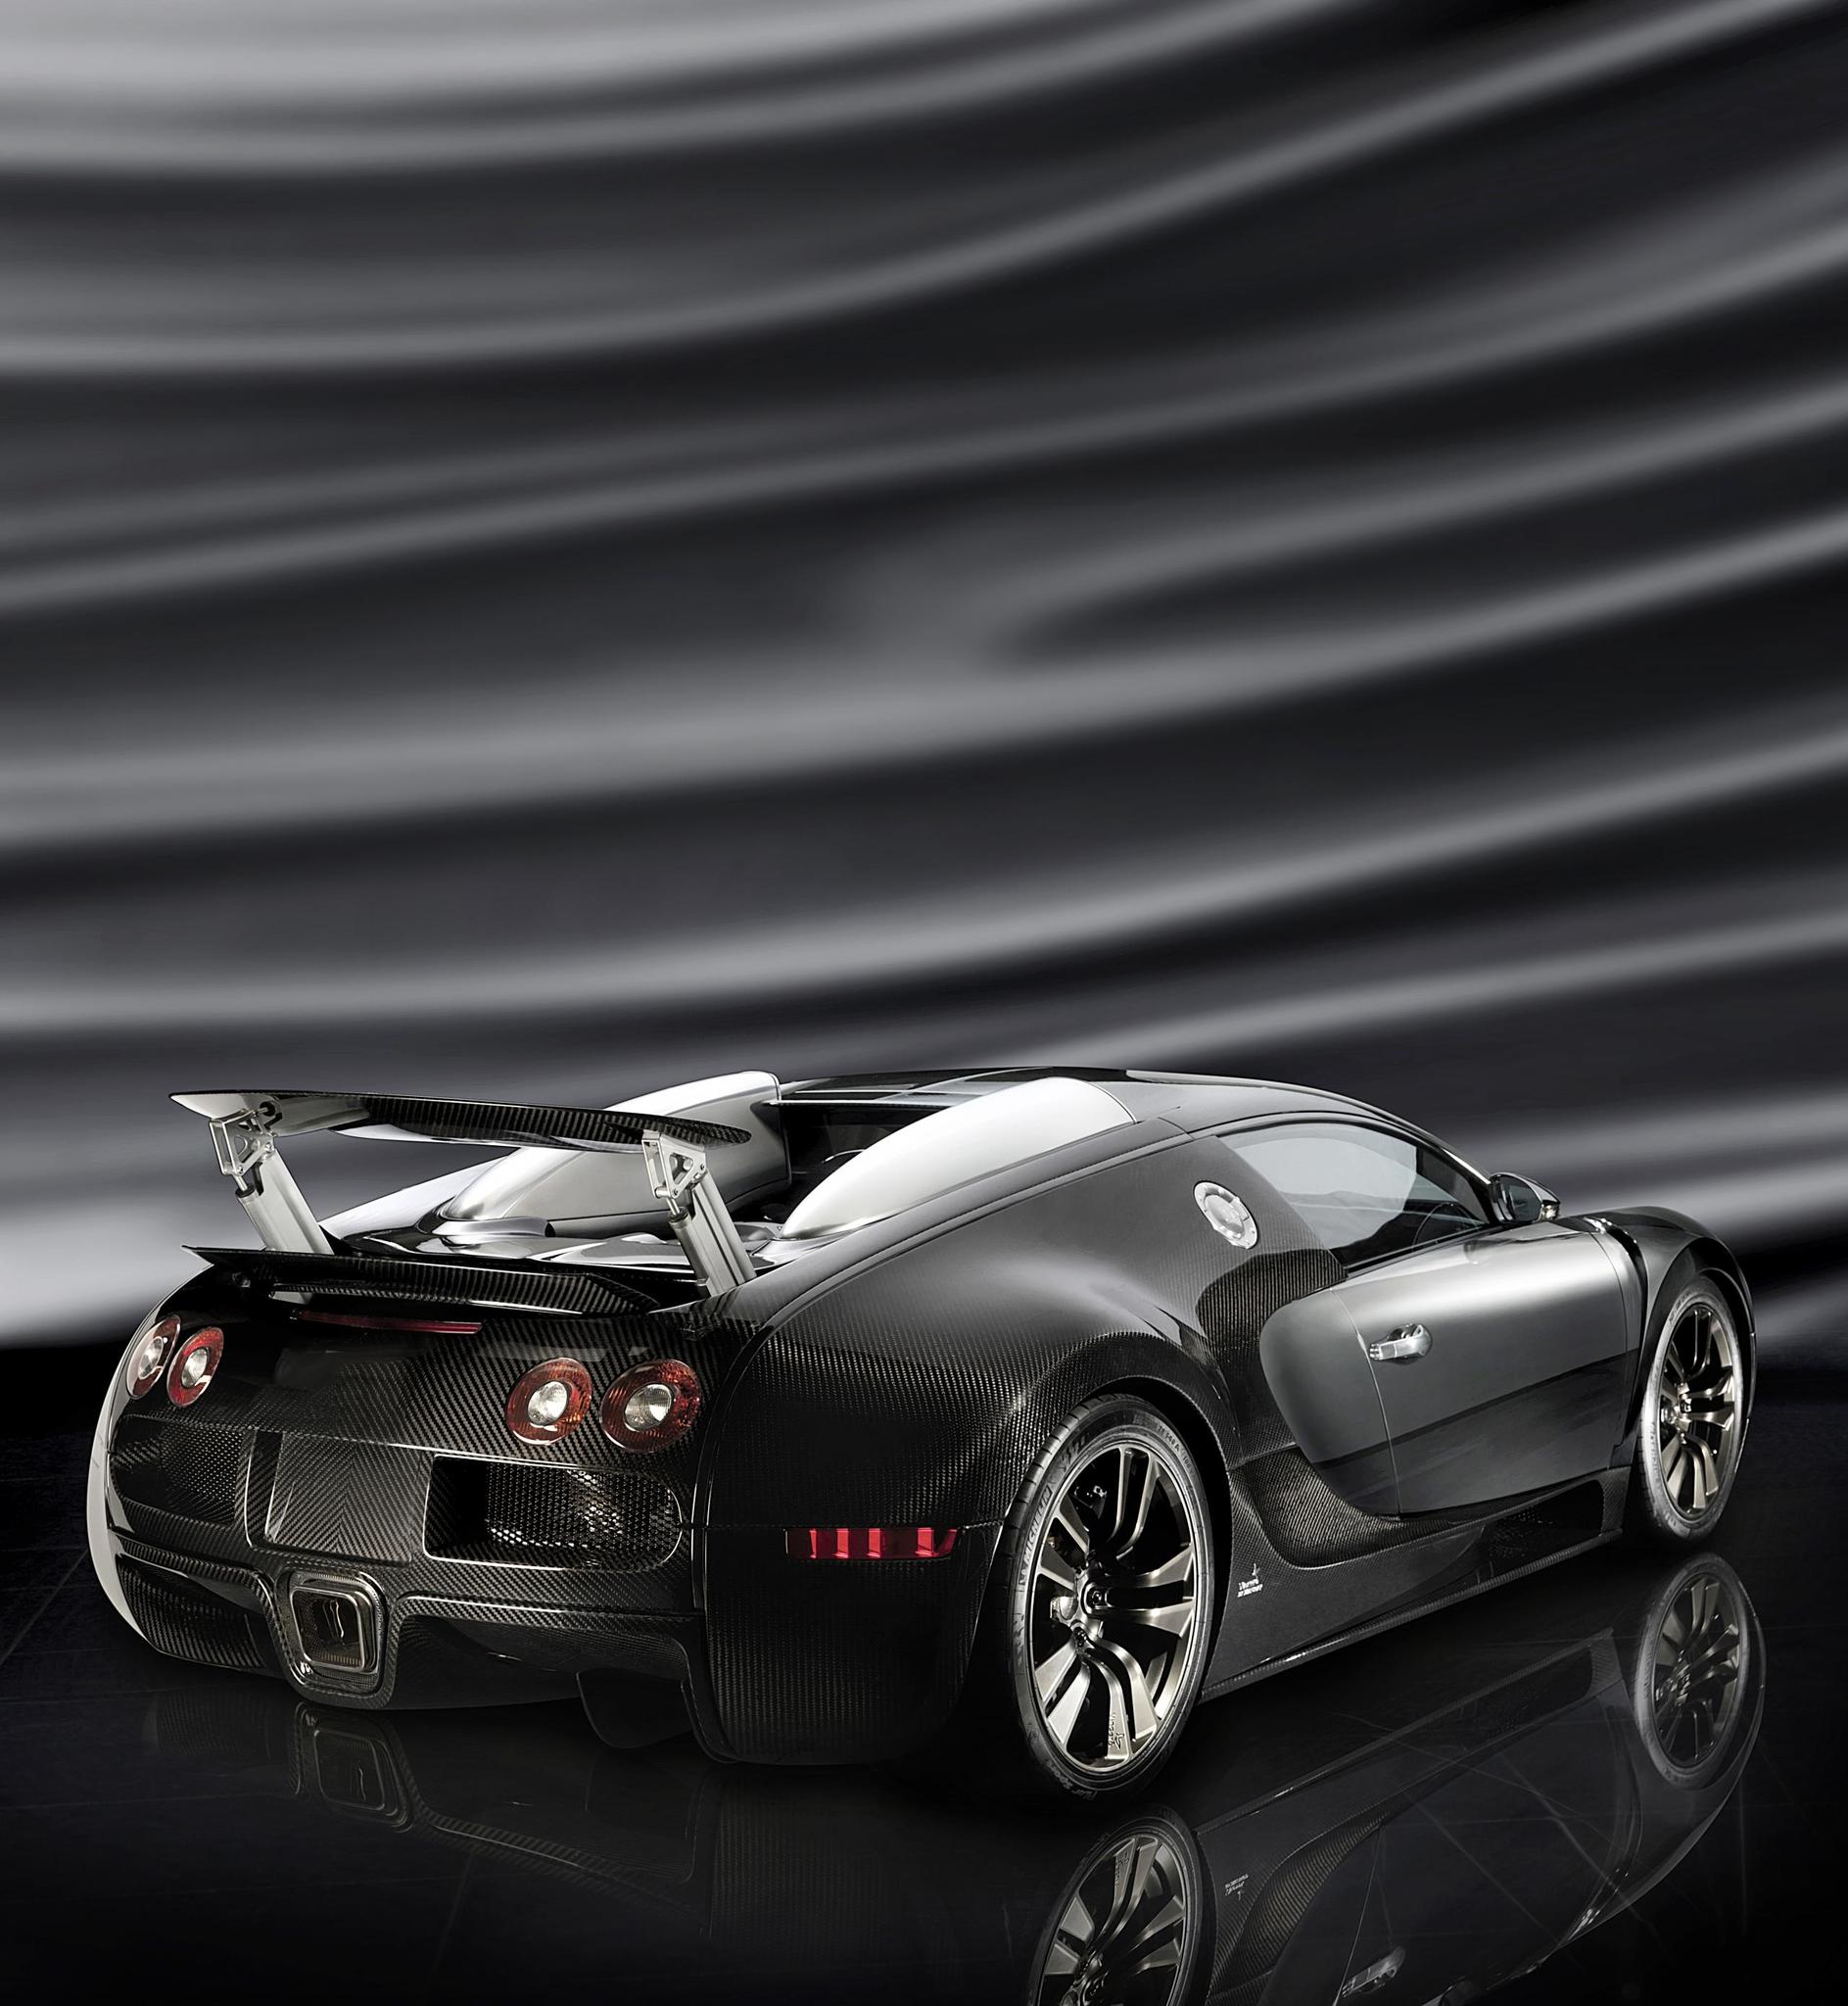 Mansory body kit for Bugatti Veyron new style